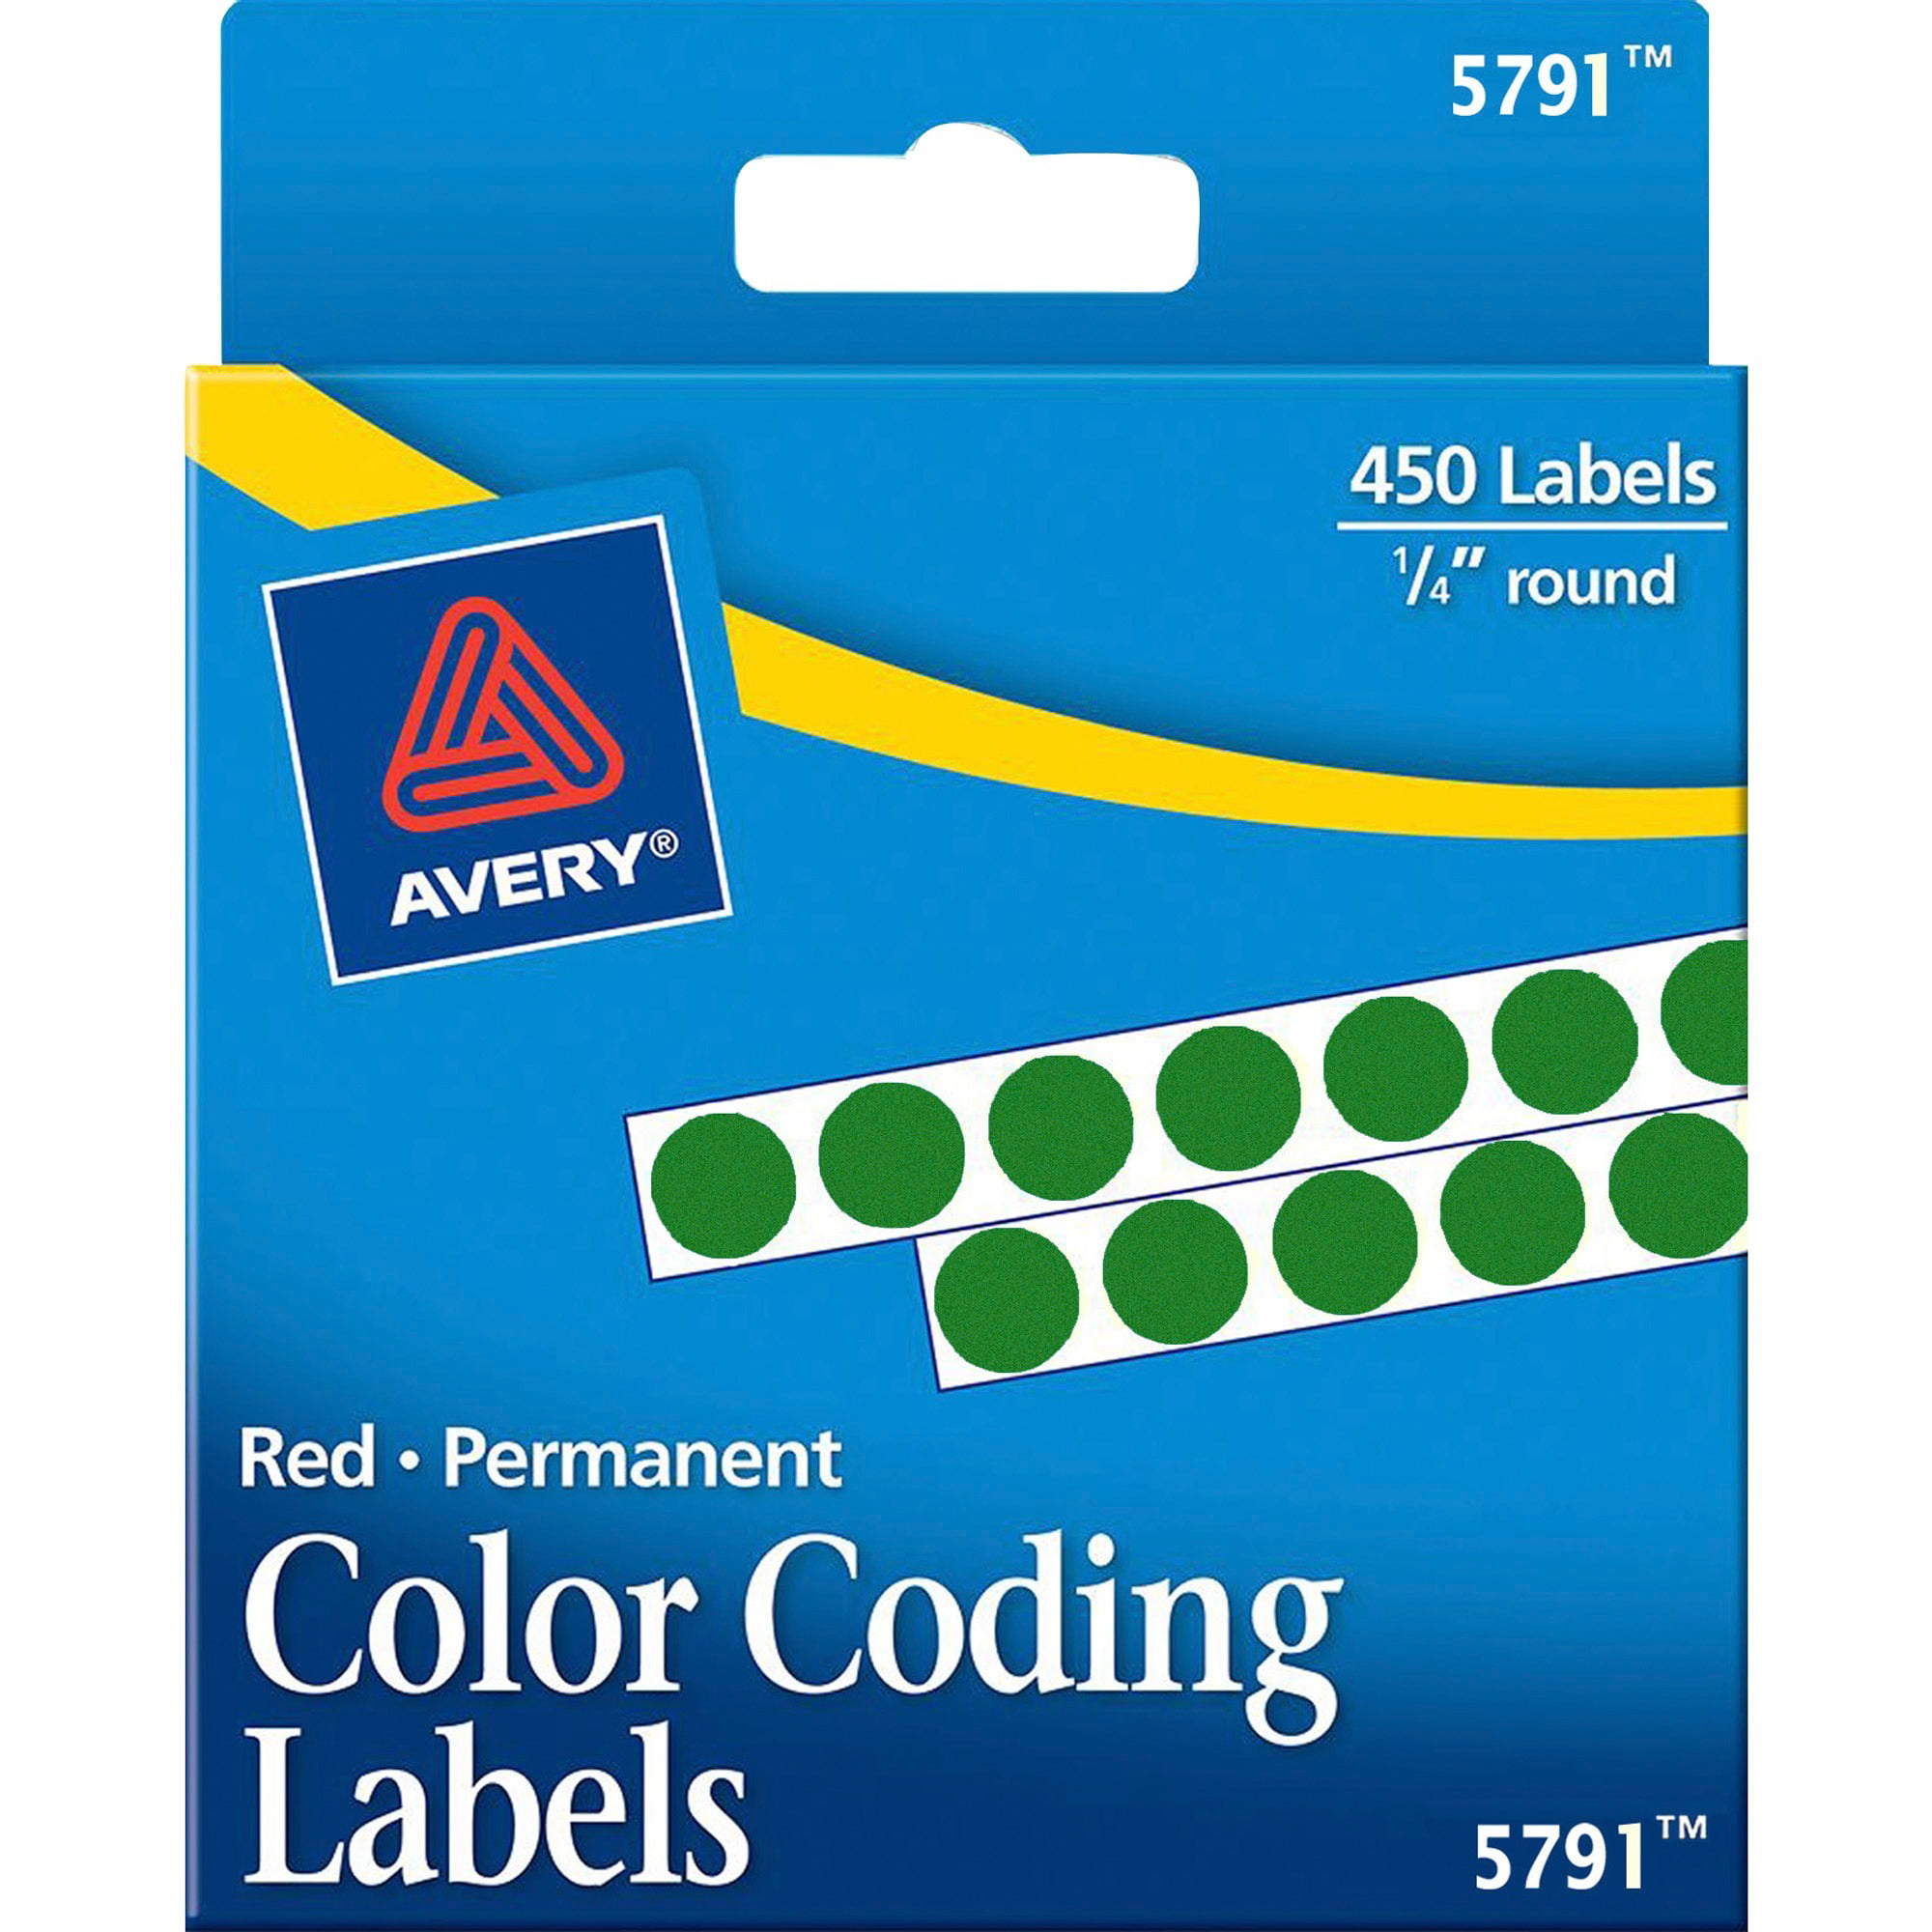 Coding Labels Dispenser Box Neon Green Color 1-1/2 Inch Round 1500 Stickers 